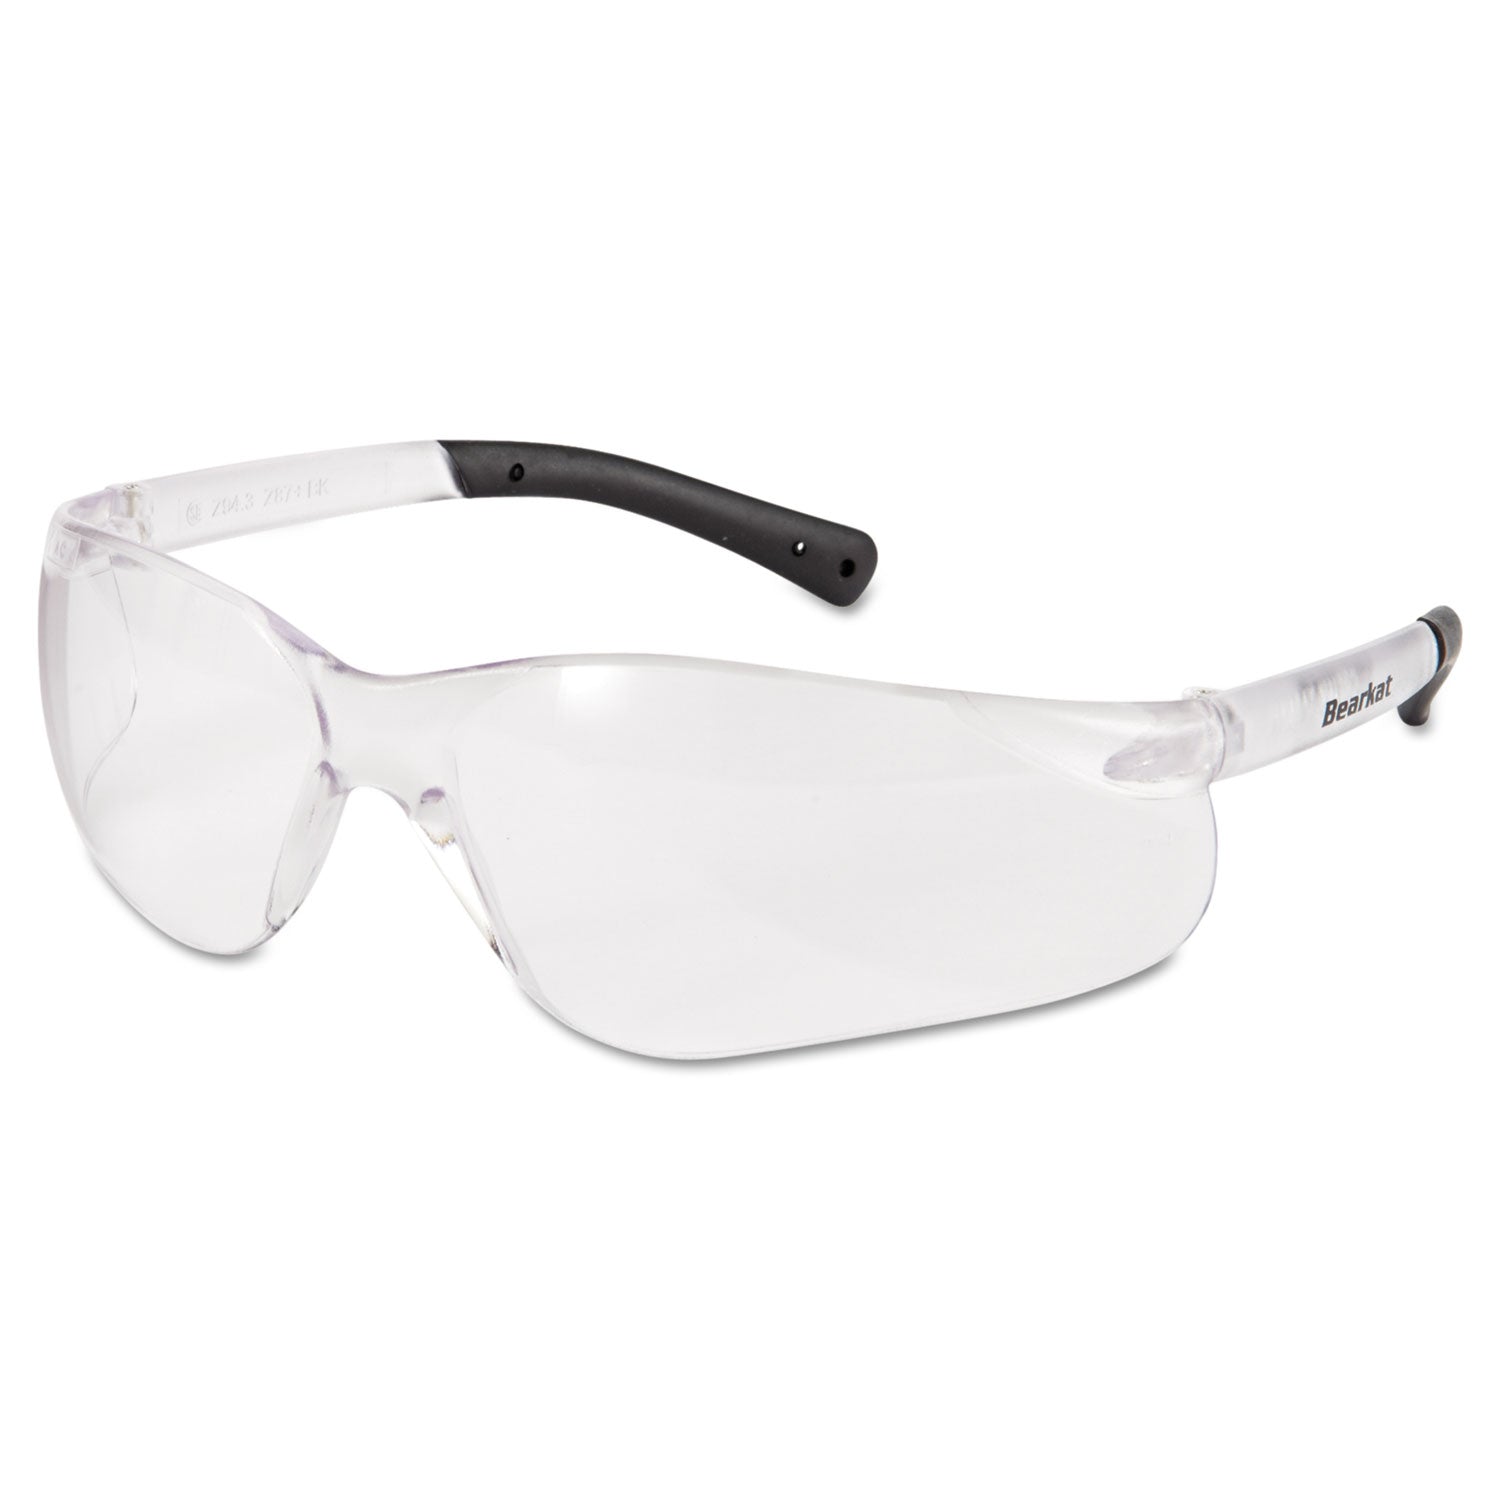 BearKat Safety Glasses, Frost Frame, Clear Lens, 12/Box - 